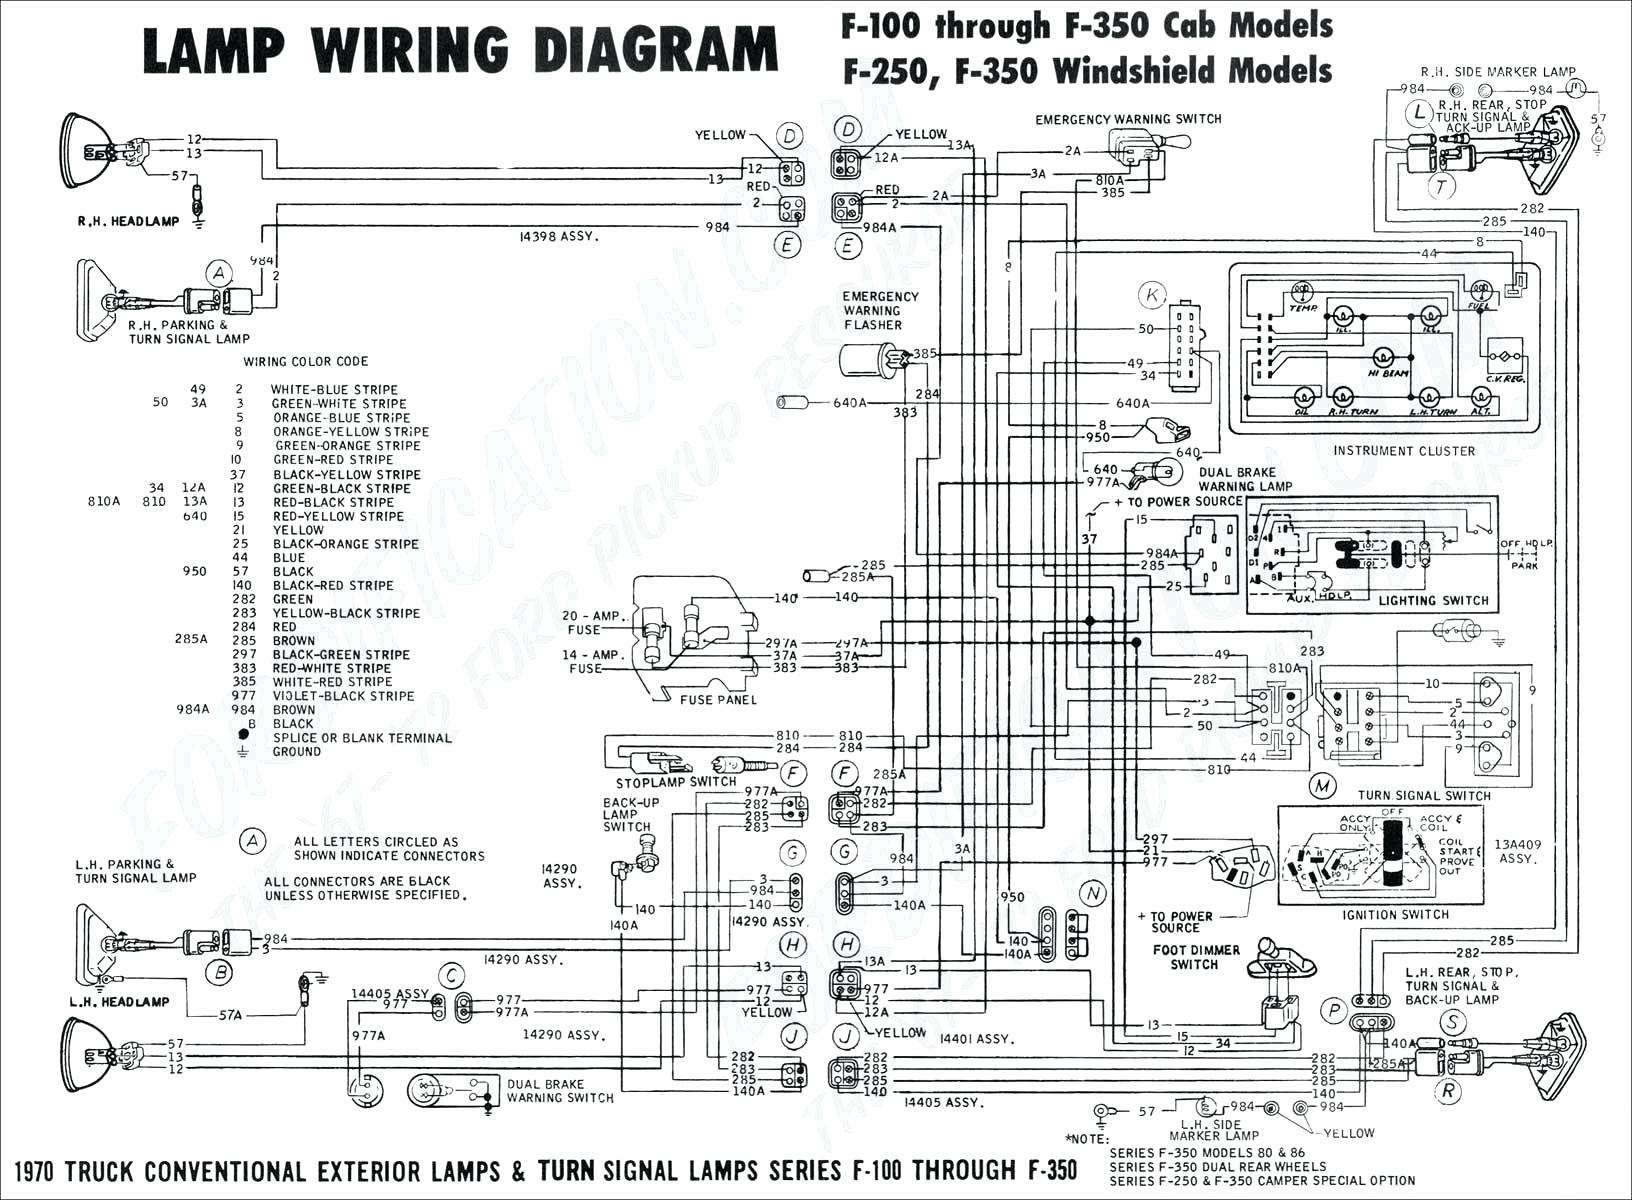 Coachmen Wiring Diagrams Lovely Rv Wiring Diagrams Diagram Converter Power 7 Way Plug Lovely